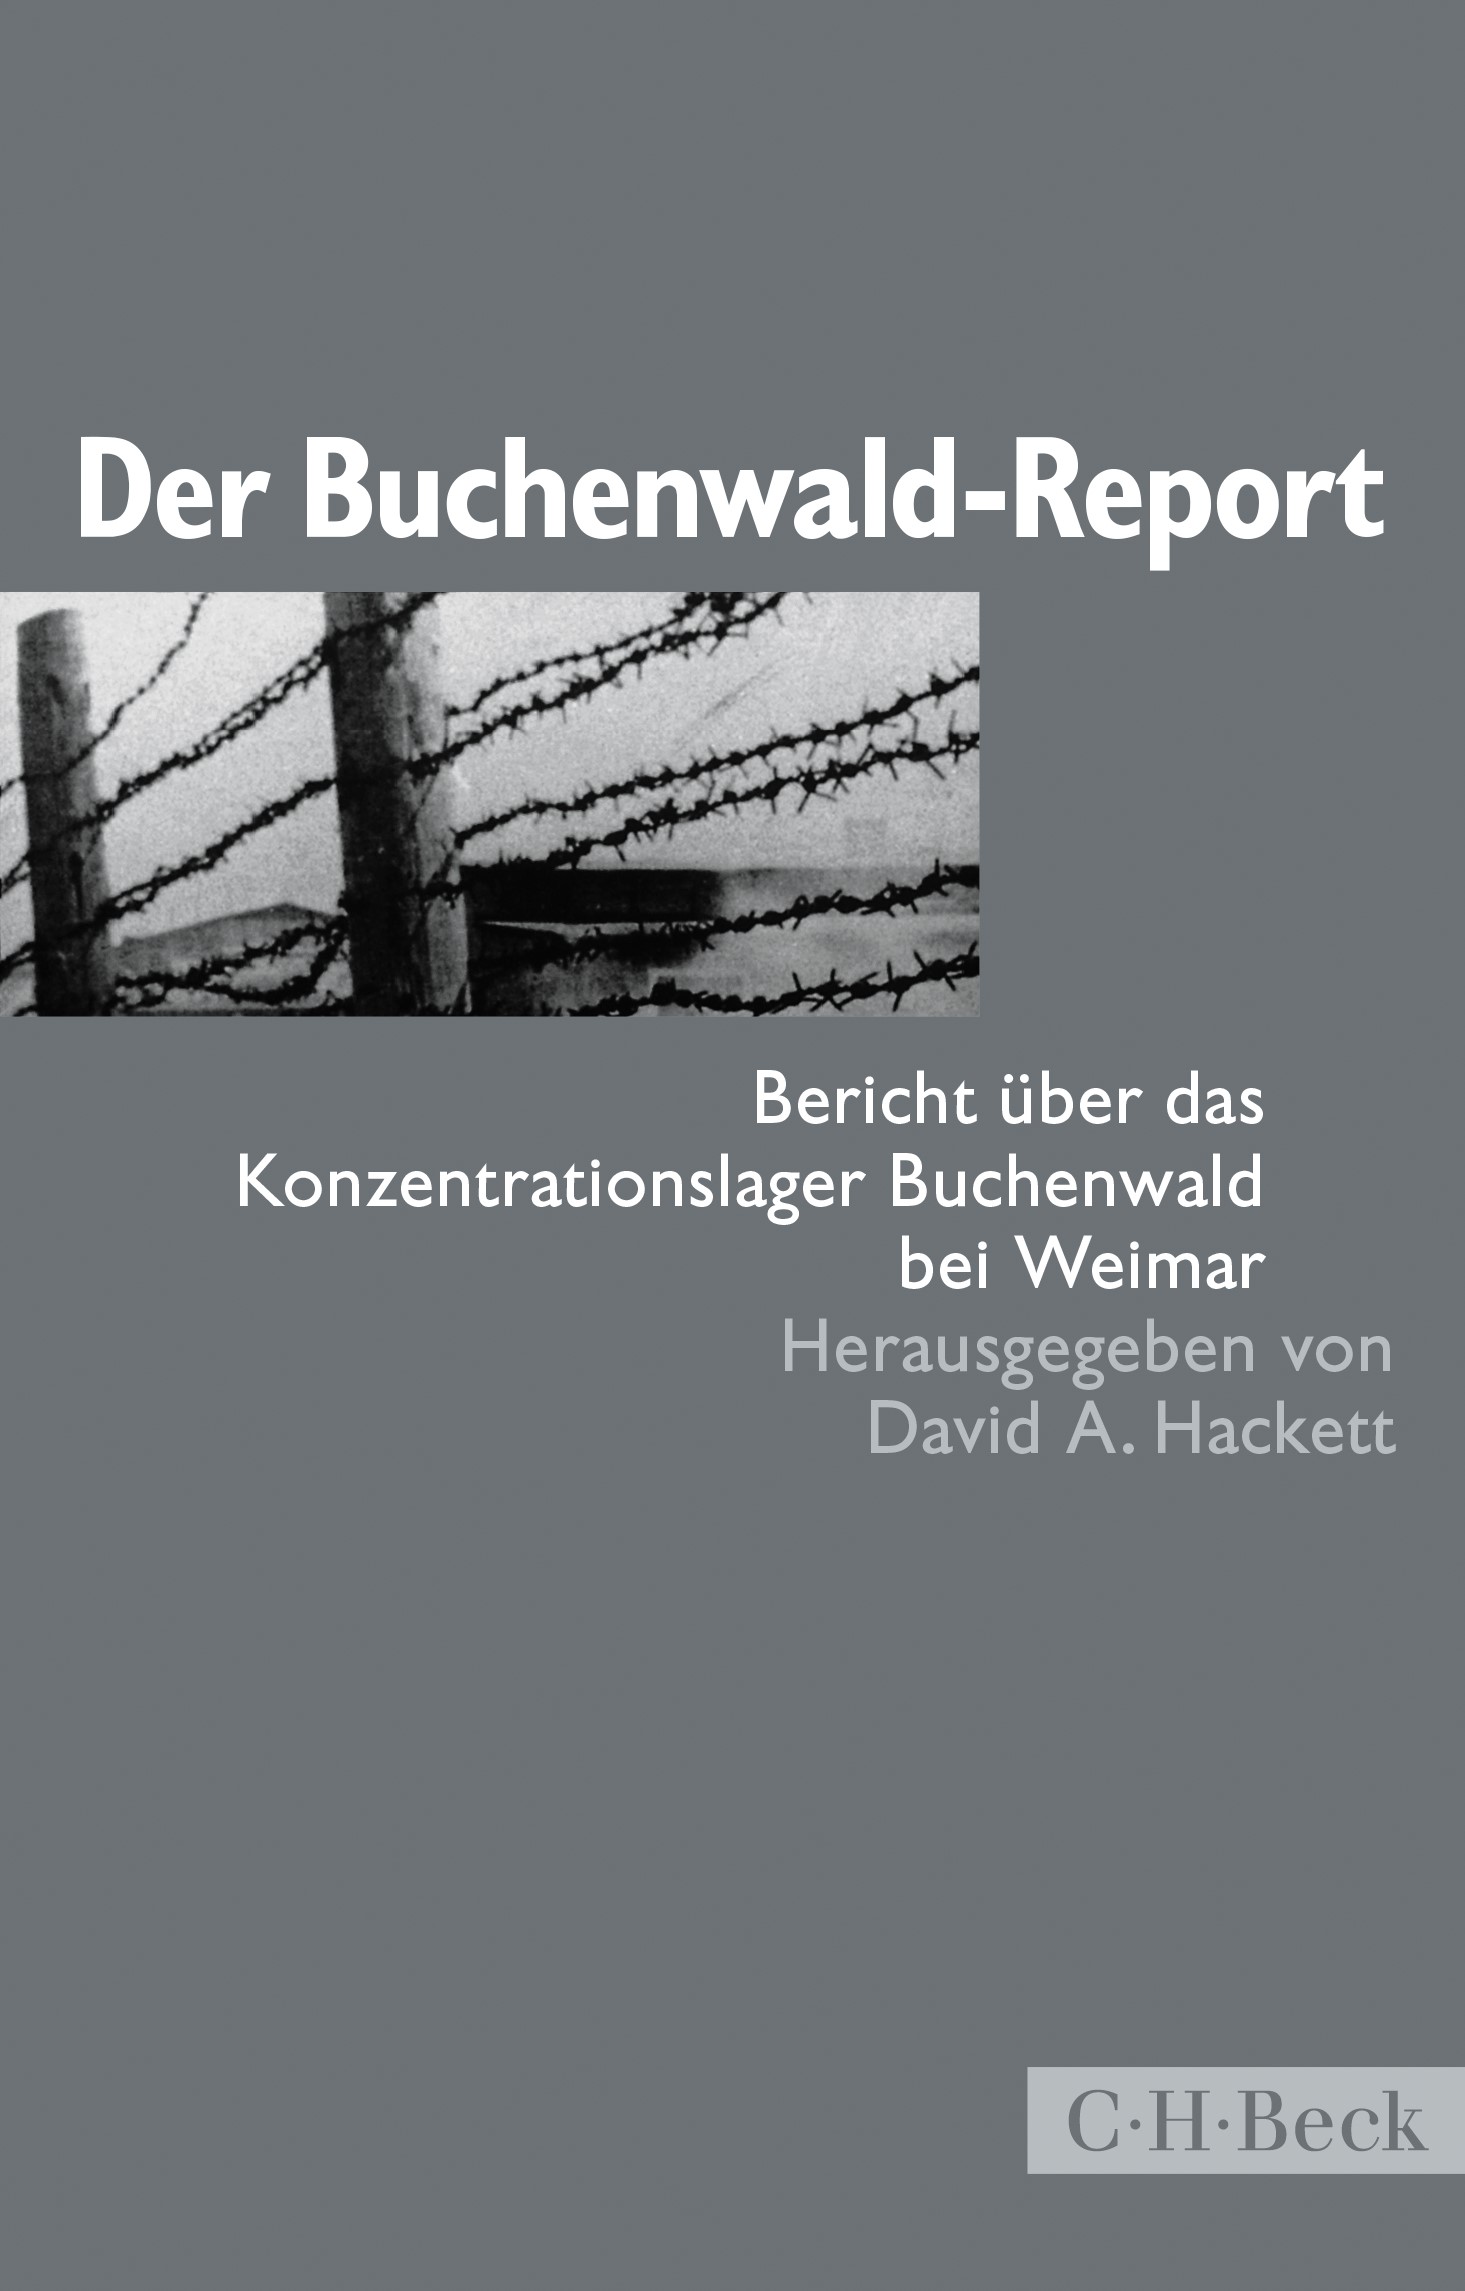 Cover: Hackett, David A., Der Buchenwald-Report